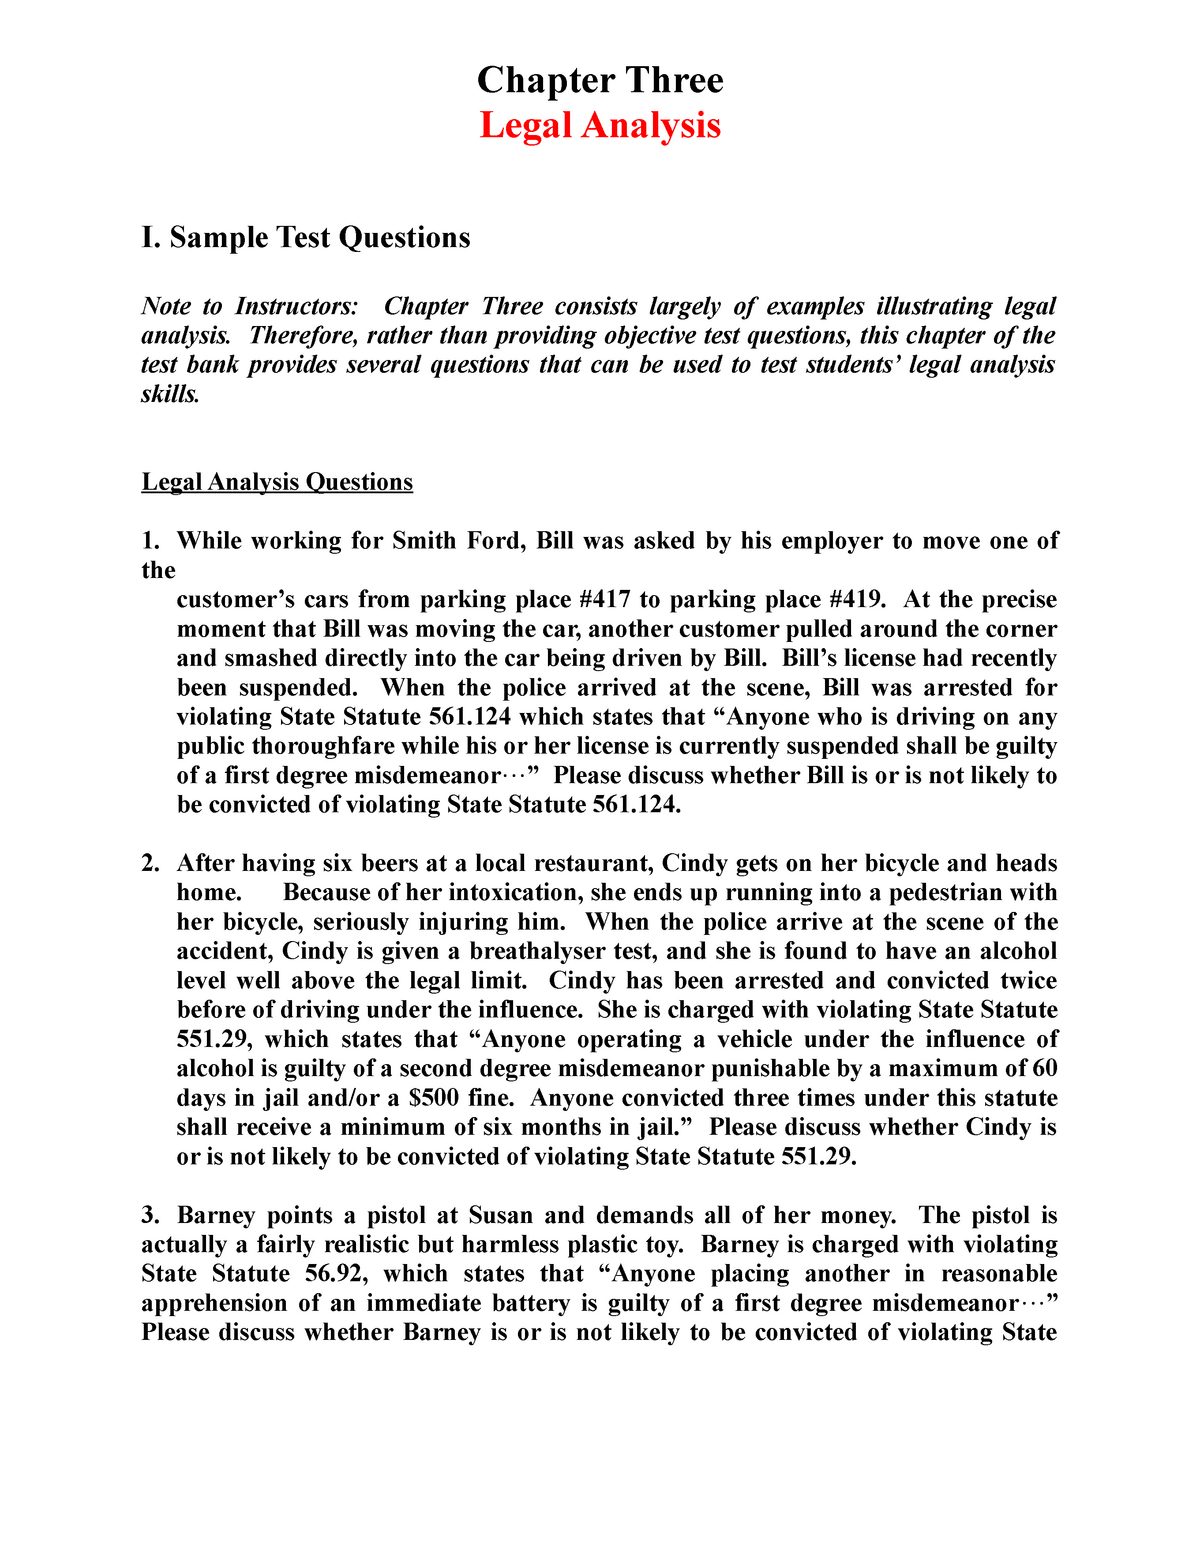 legal analysis essay example